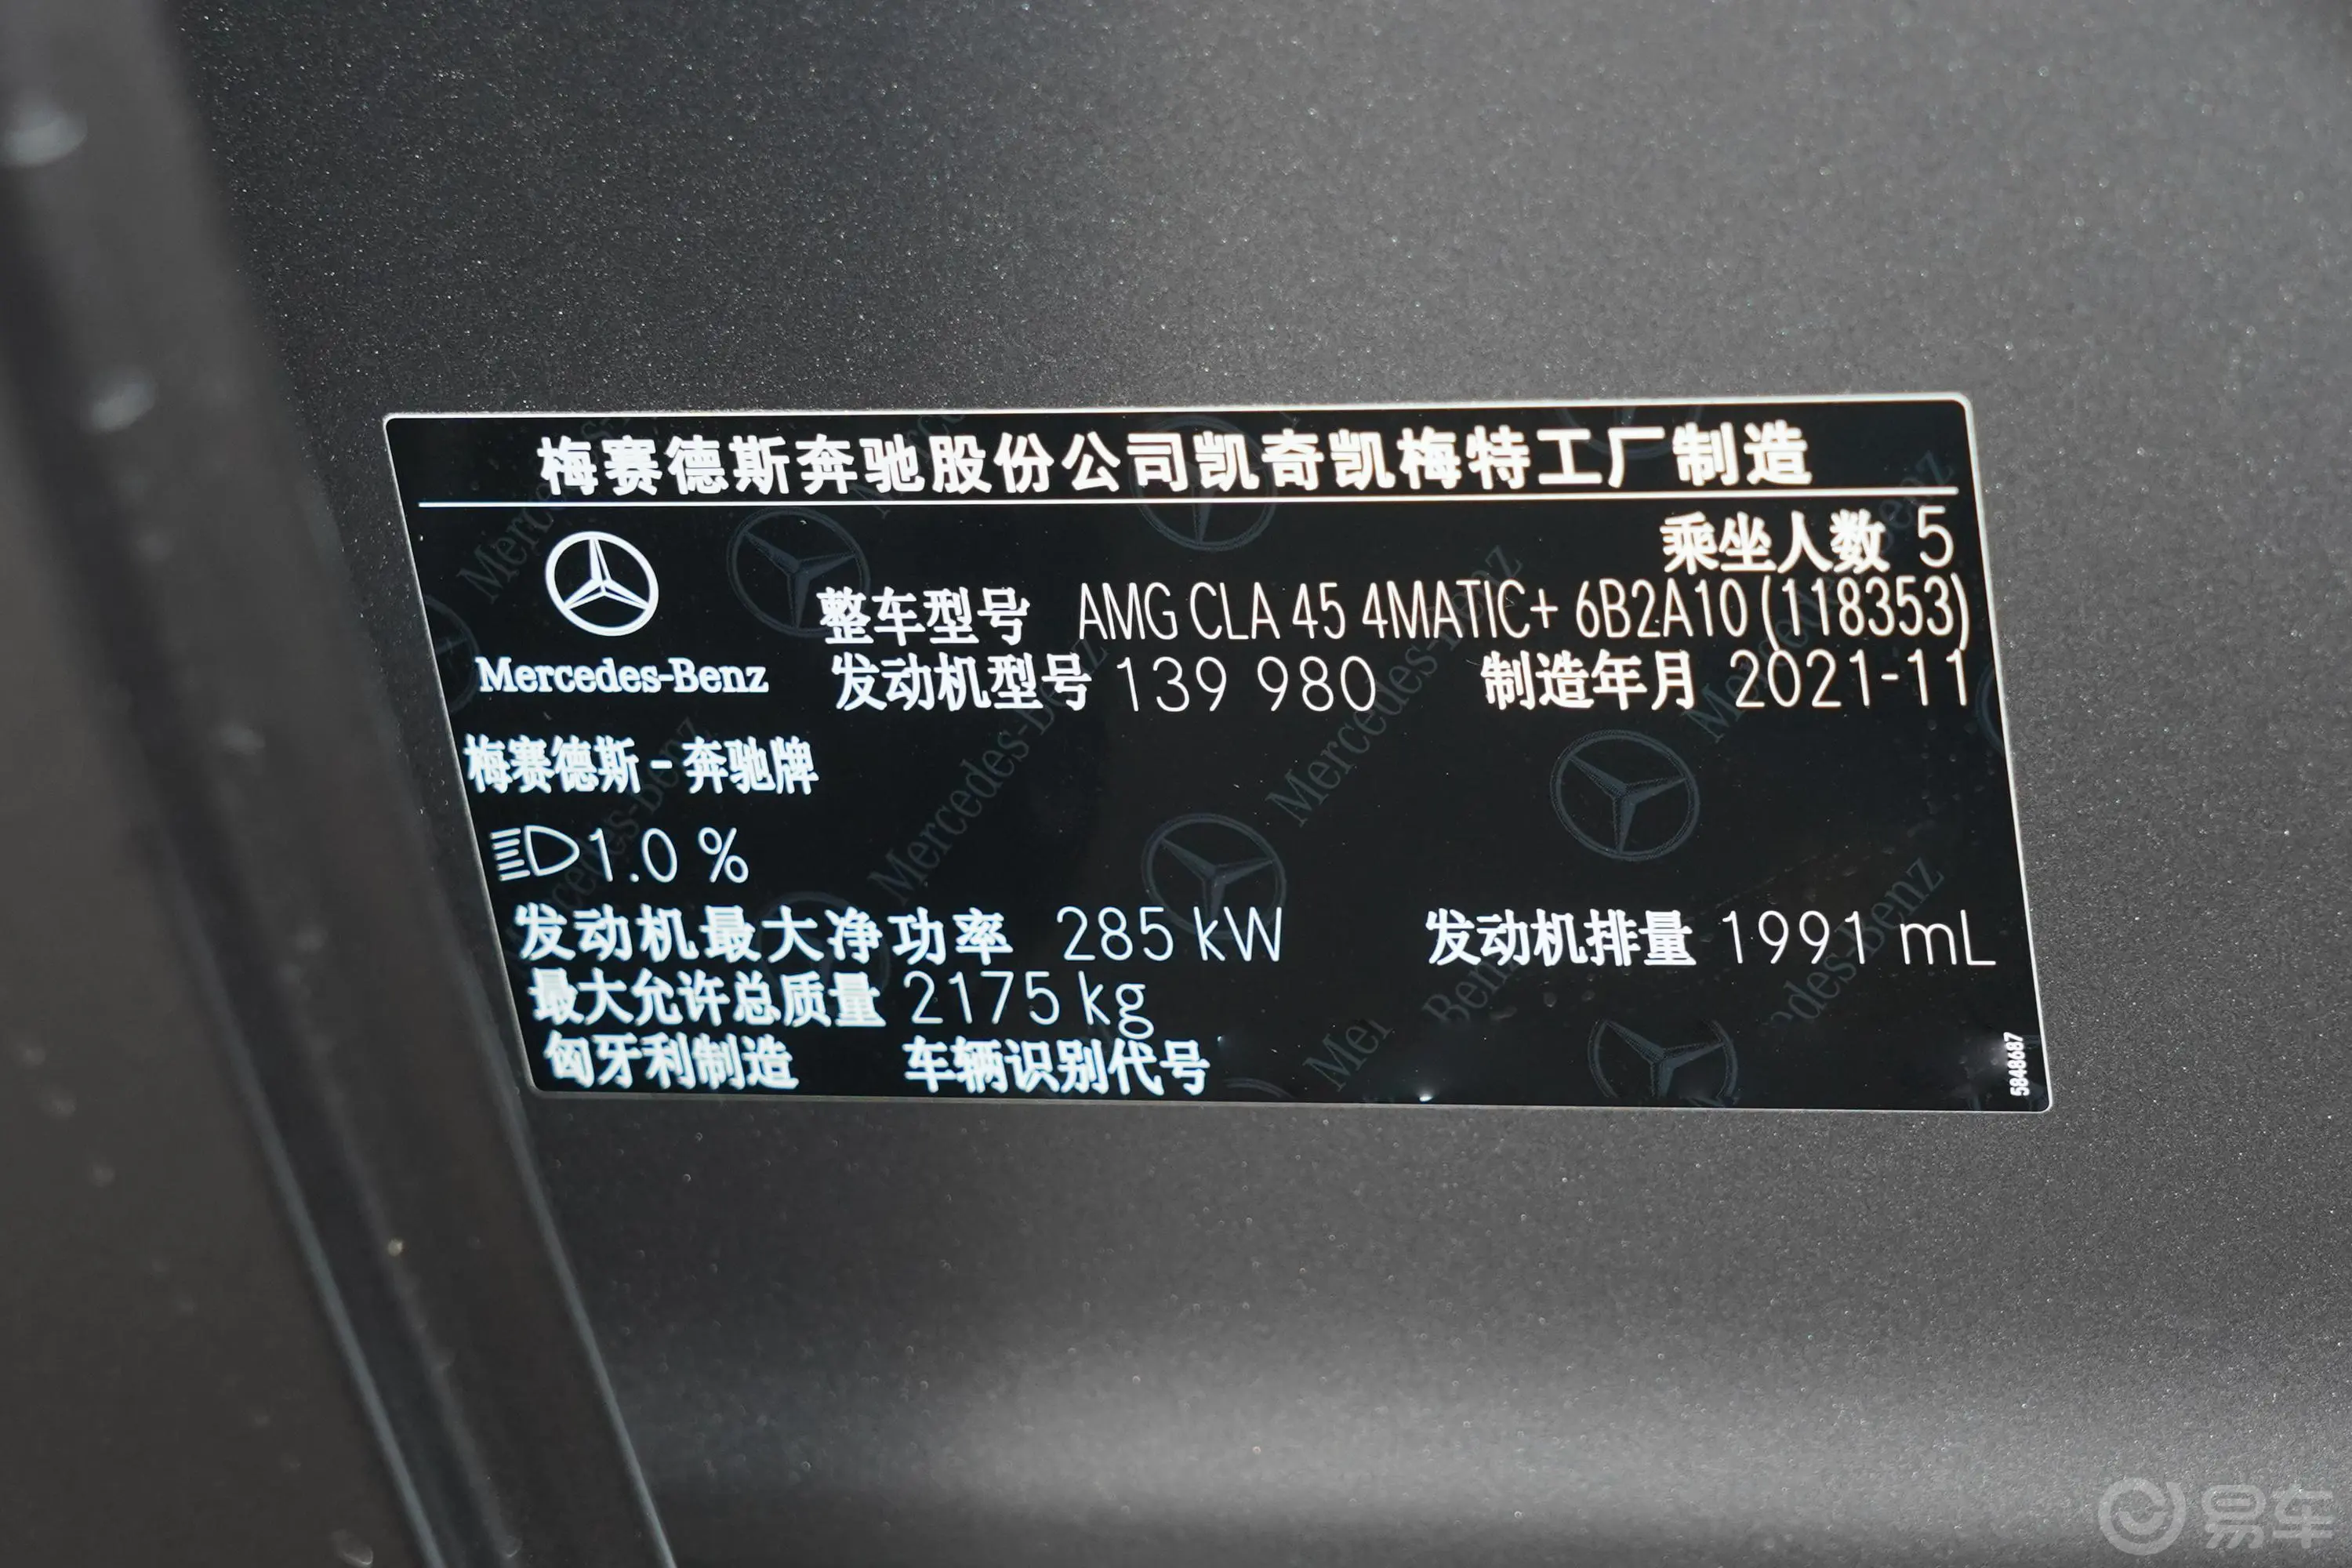 奔驰CLA级 AMGAMG CLA 45 4MATIC+车辆信息铭牌